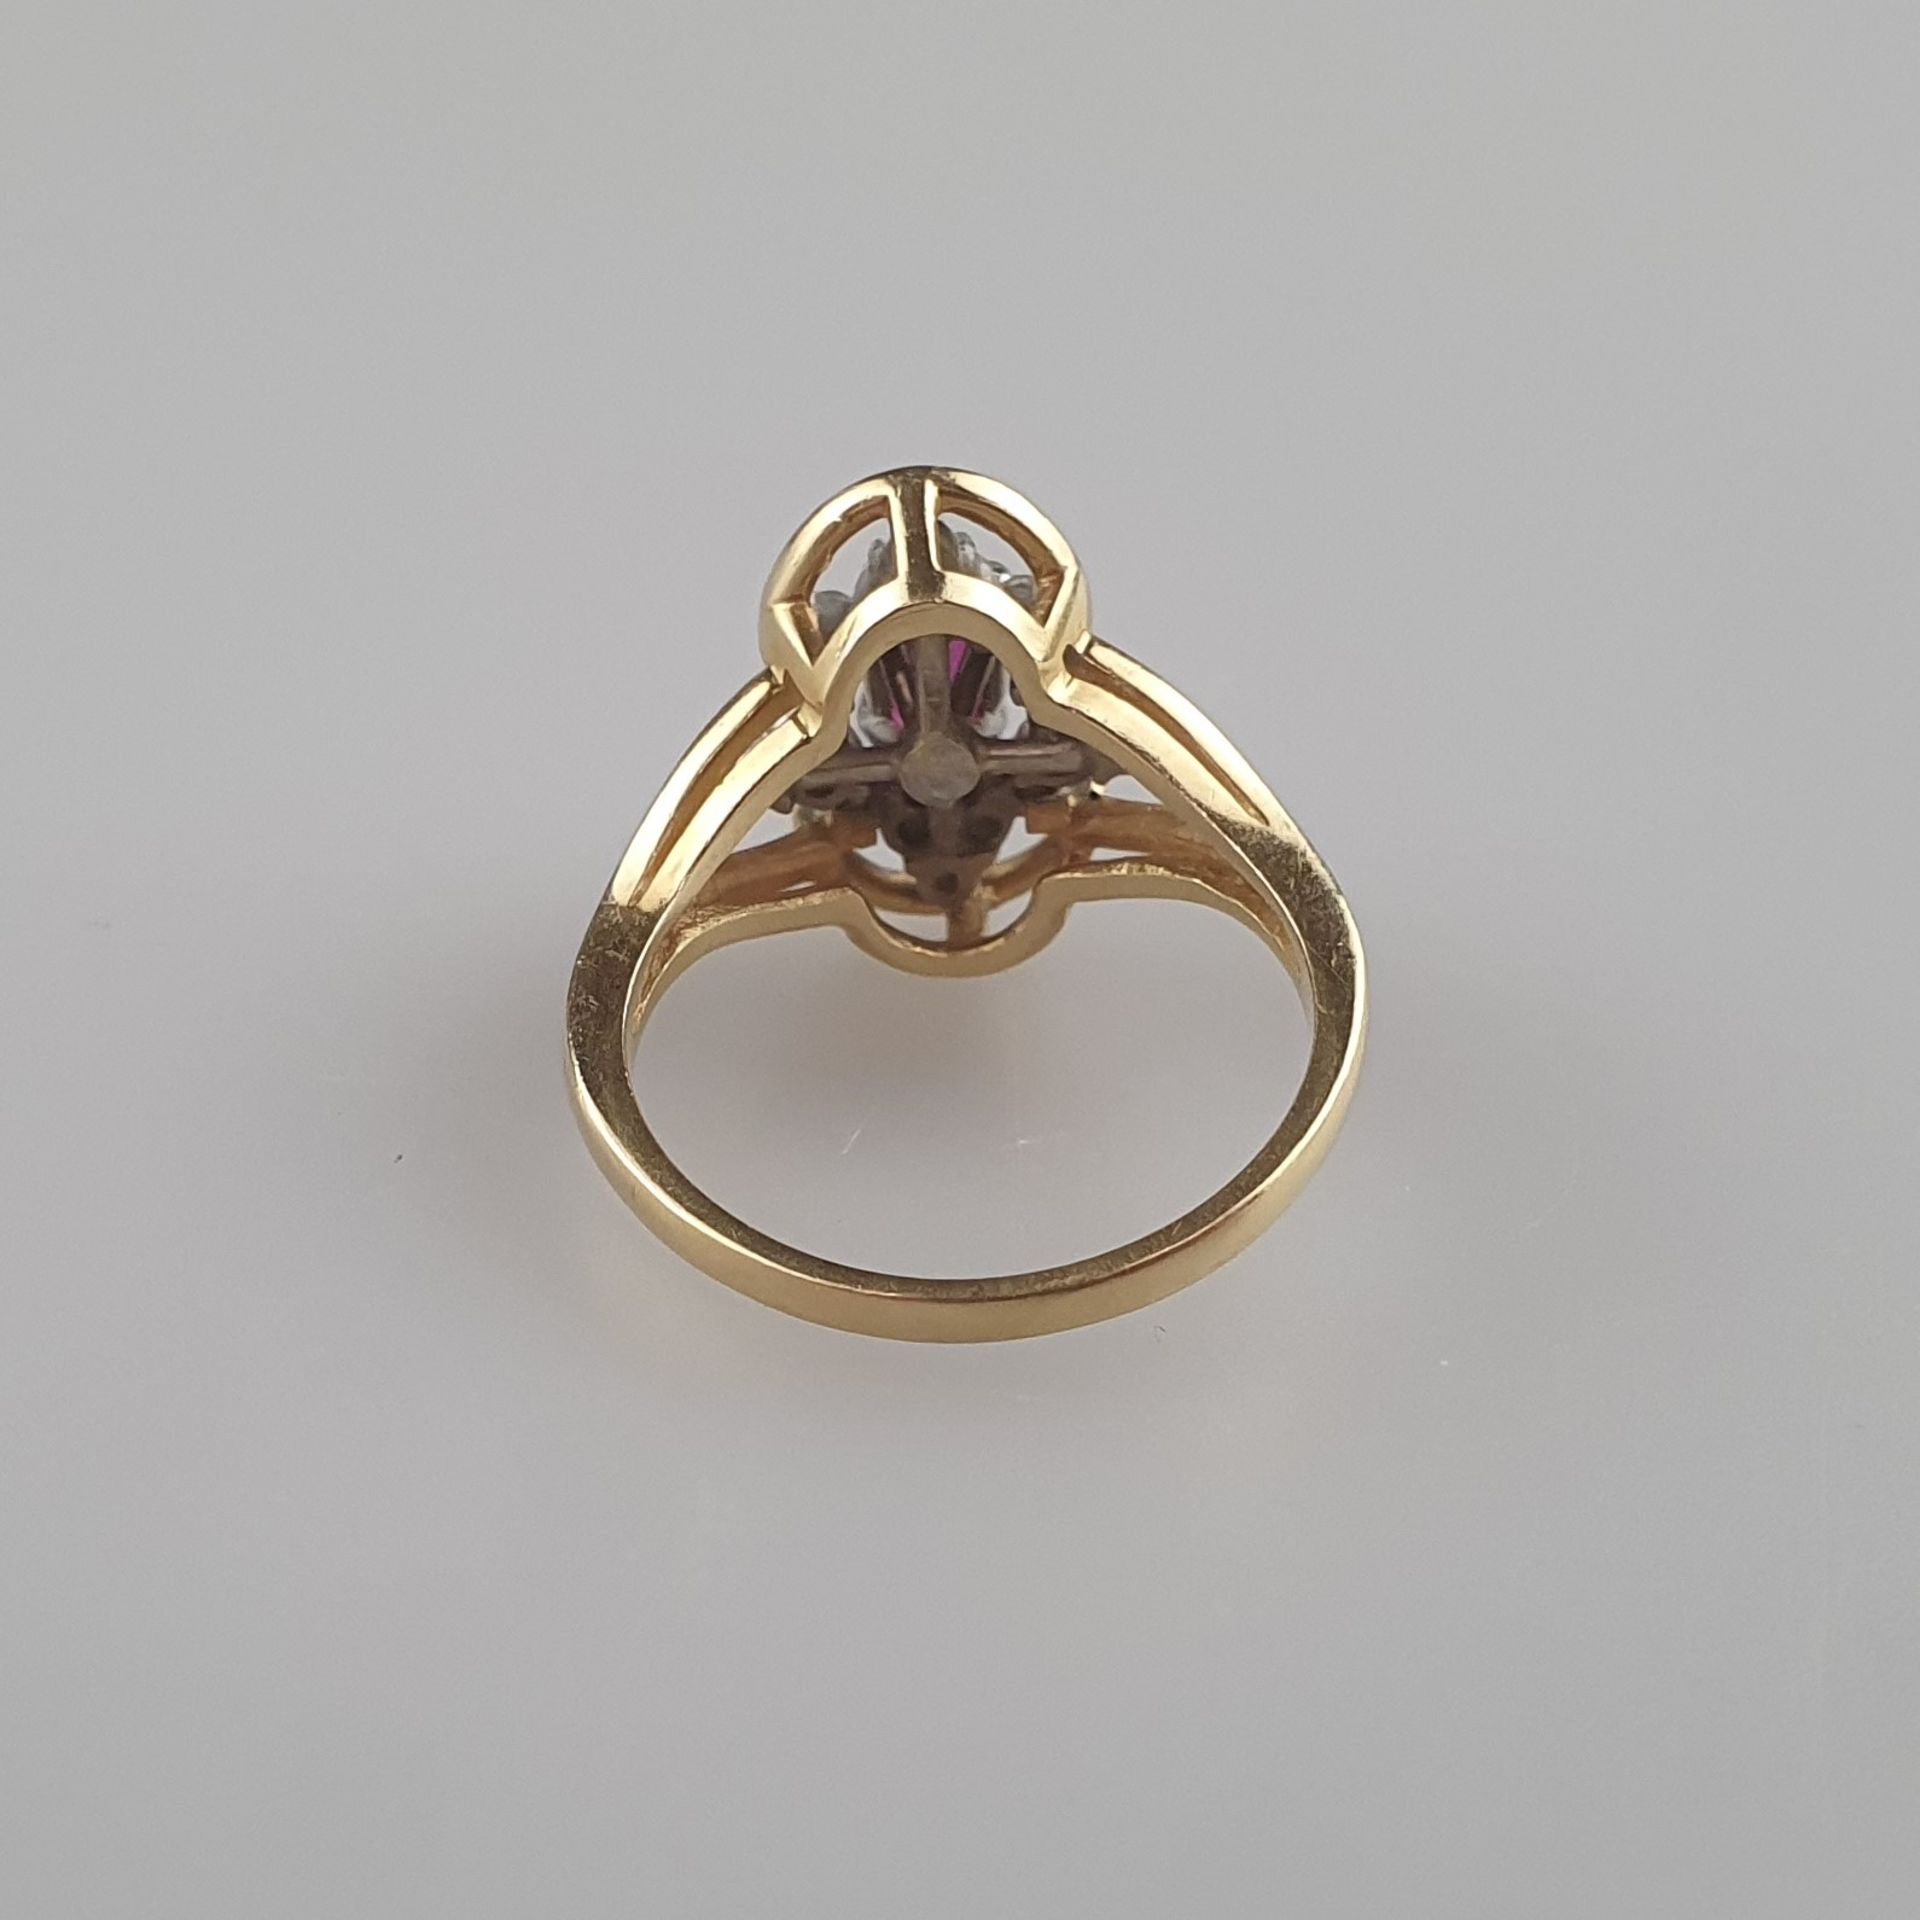 Diamant-Rubin-Ring - Gelbgold 585/000, gestempelt 14K, durchbrochener floraler Ringkopf von ca. 15 - Image 4 of 6